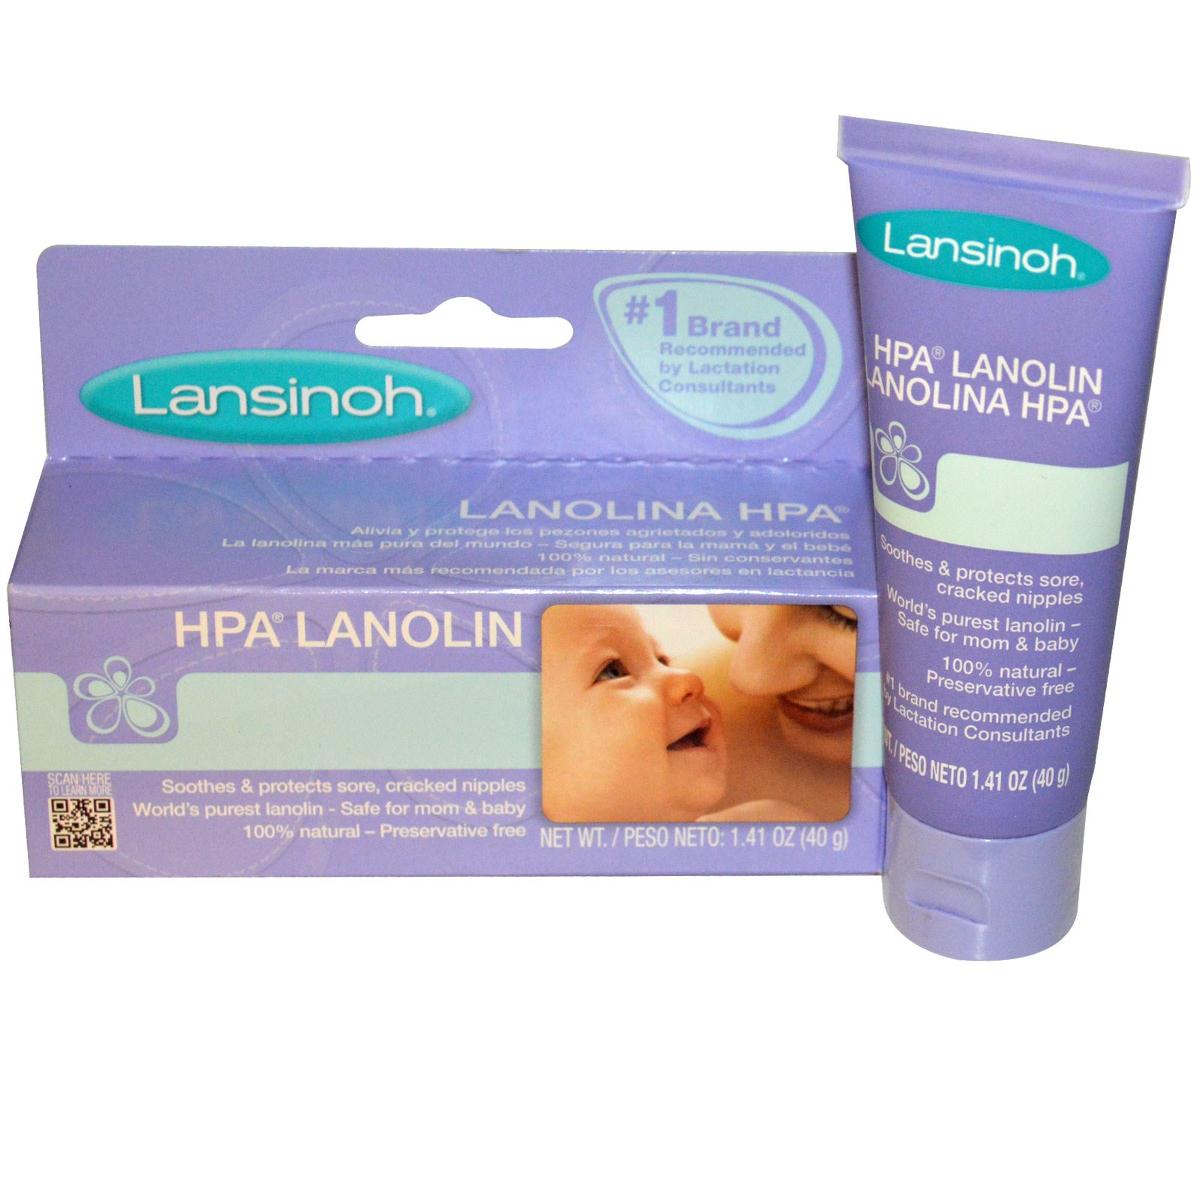 Purelan™ Lanolin Cream, Breastfeeding products